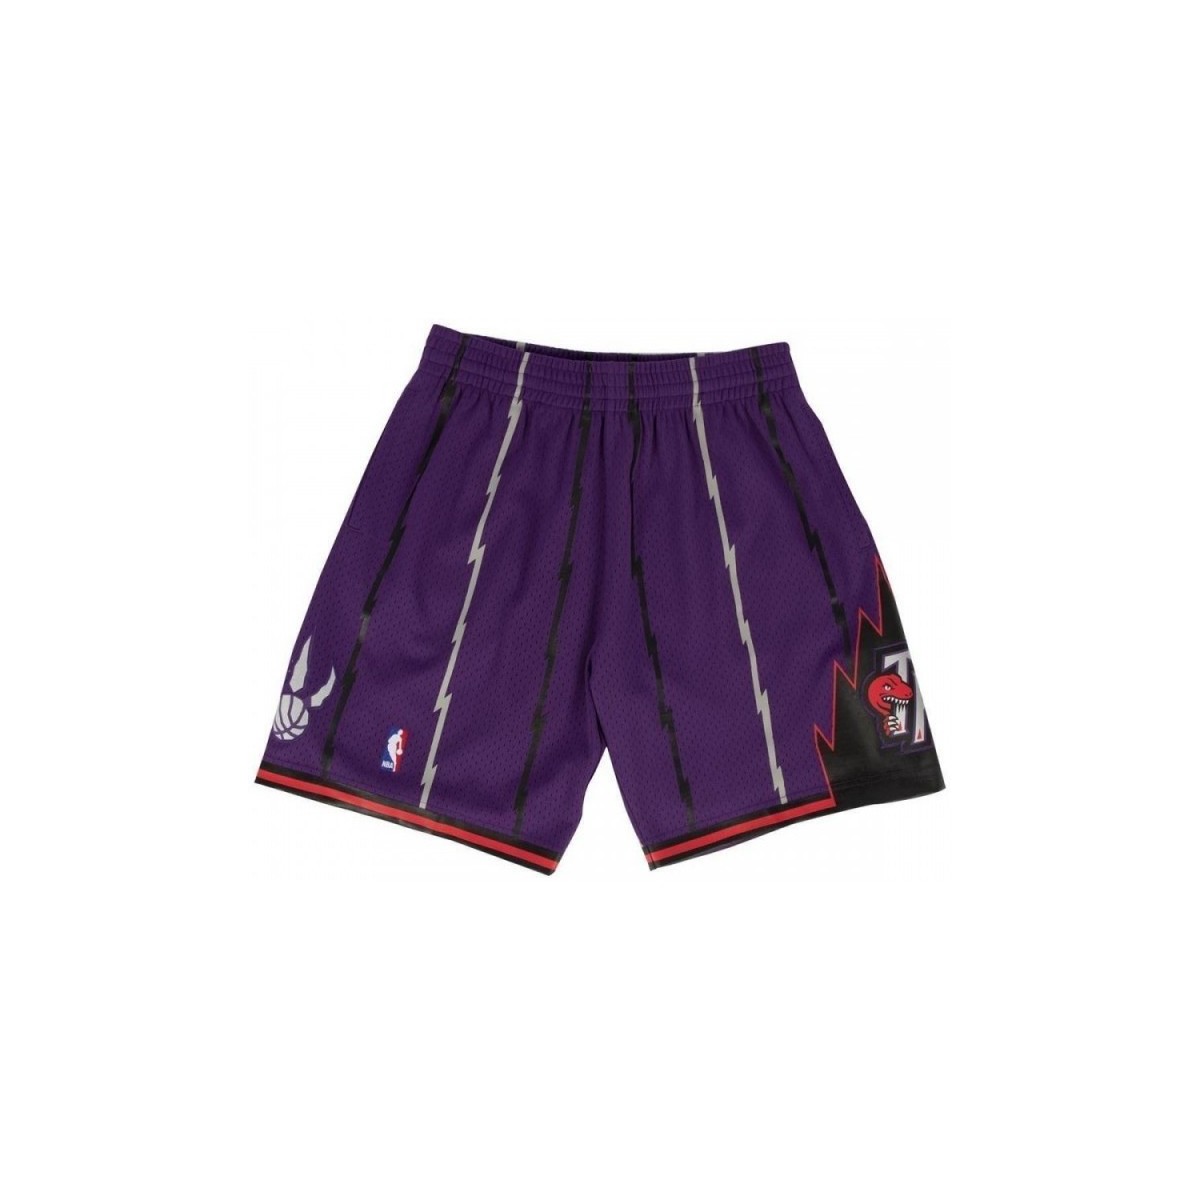 Vêtements Shorts / Bermudas Mitchell And Ness Short NBA Toronto Raptors 1998 Multicolore